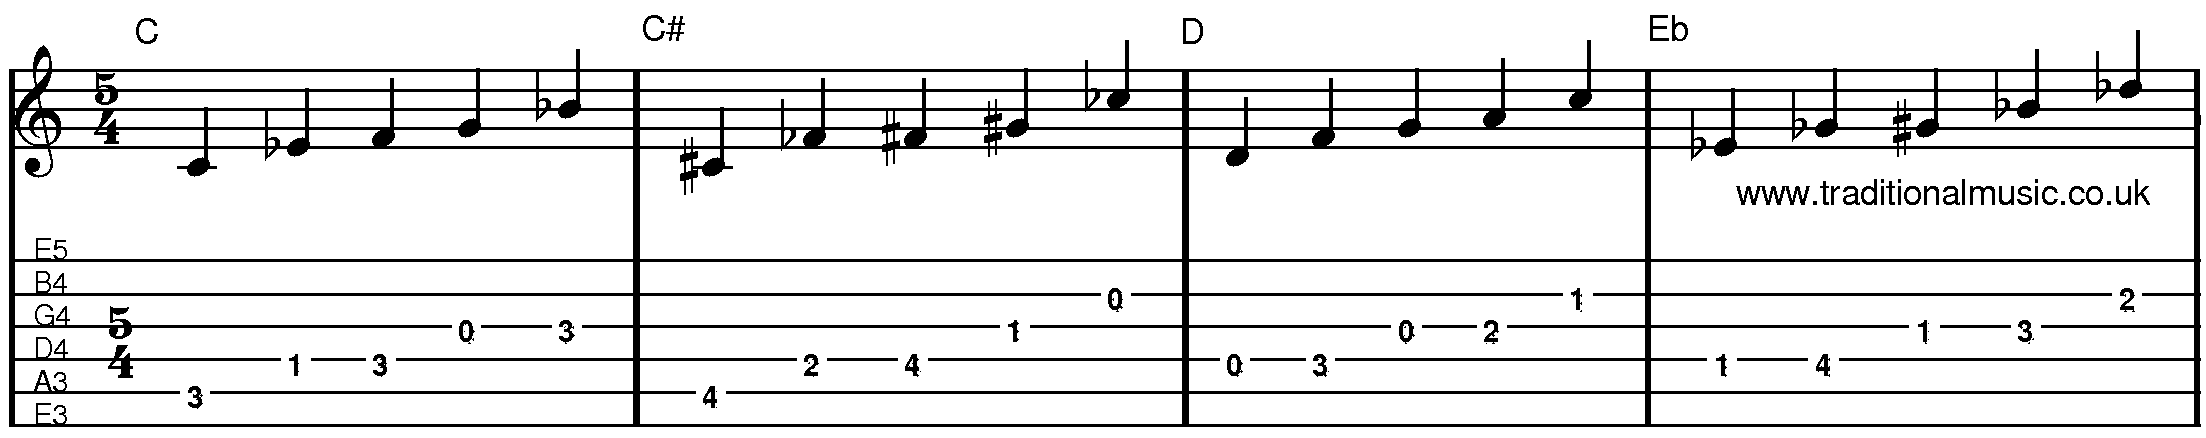 Minor Pentatonic Scales Guitar in standard tuning C-Eb